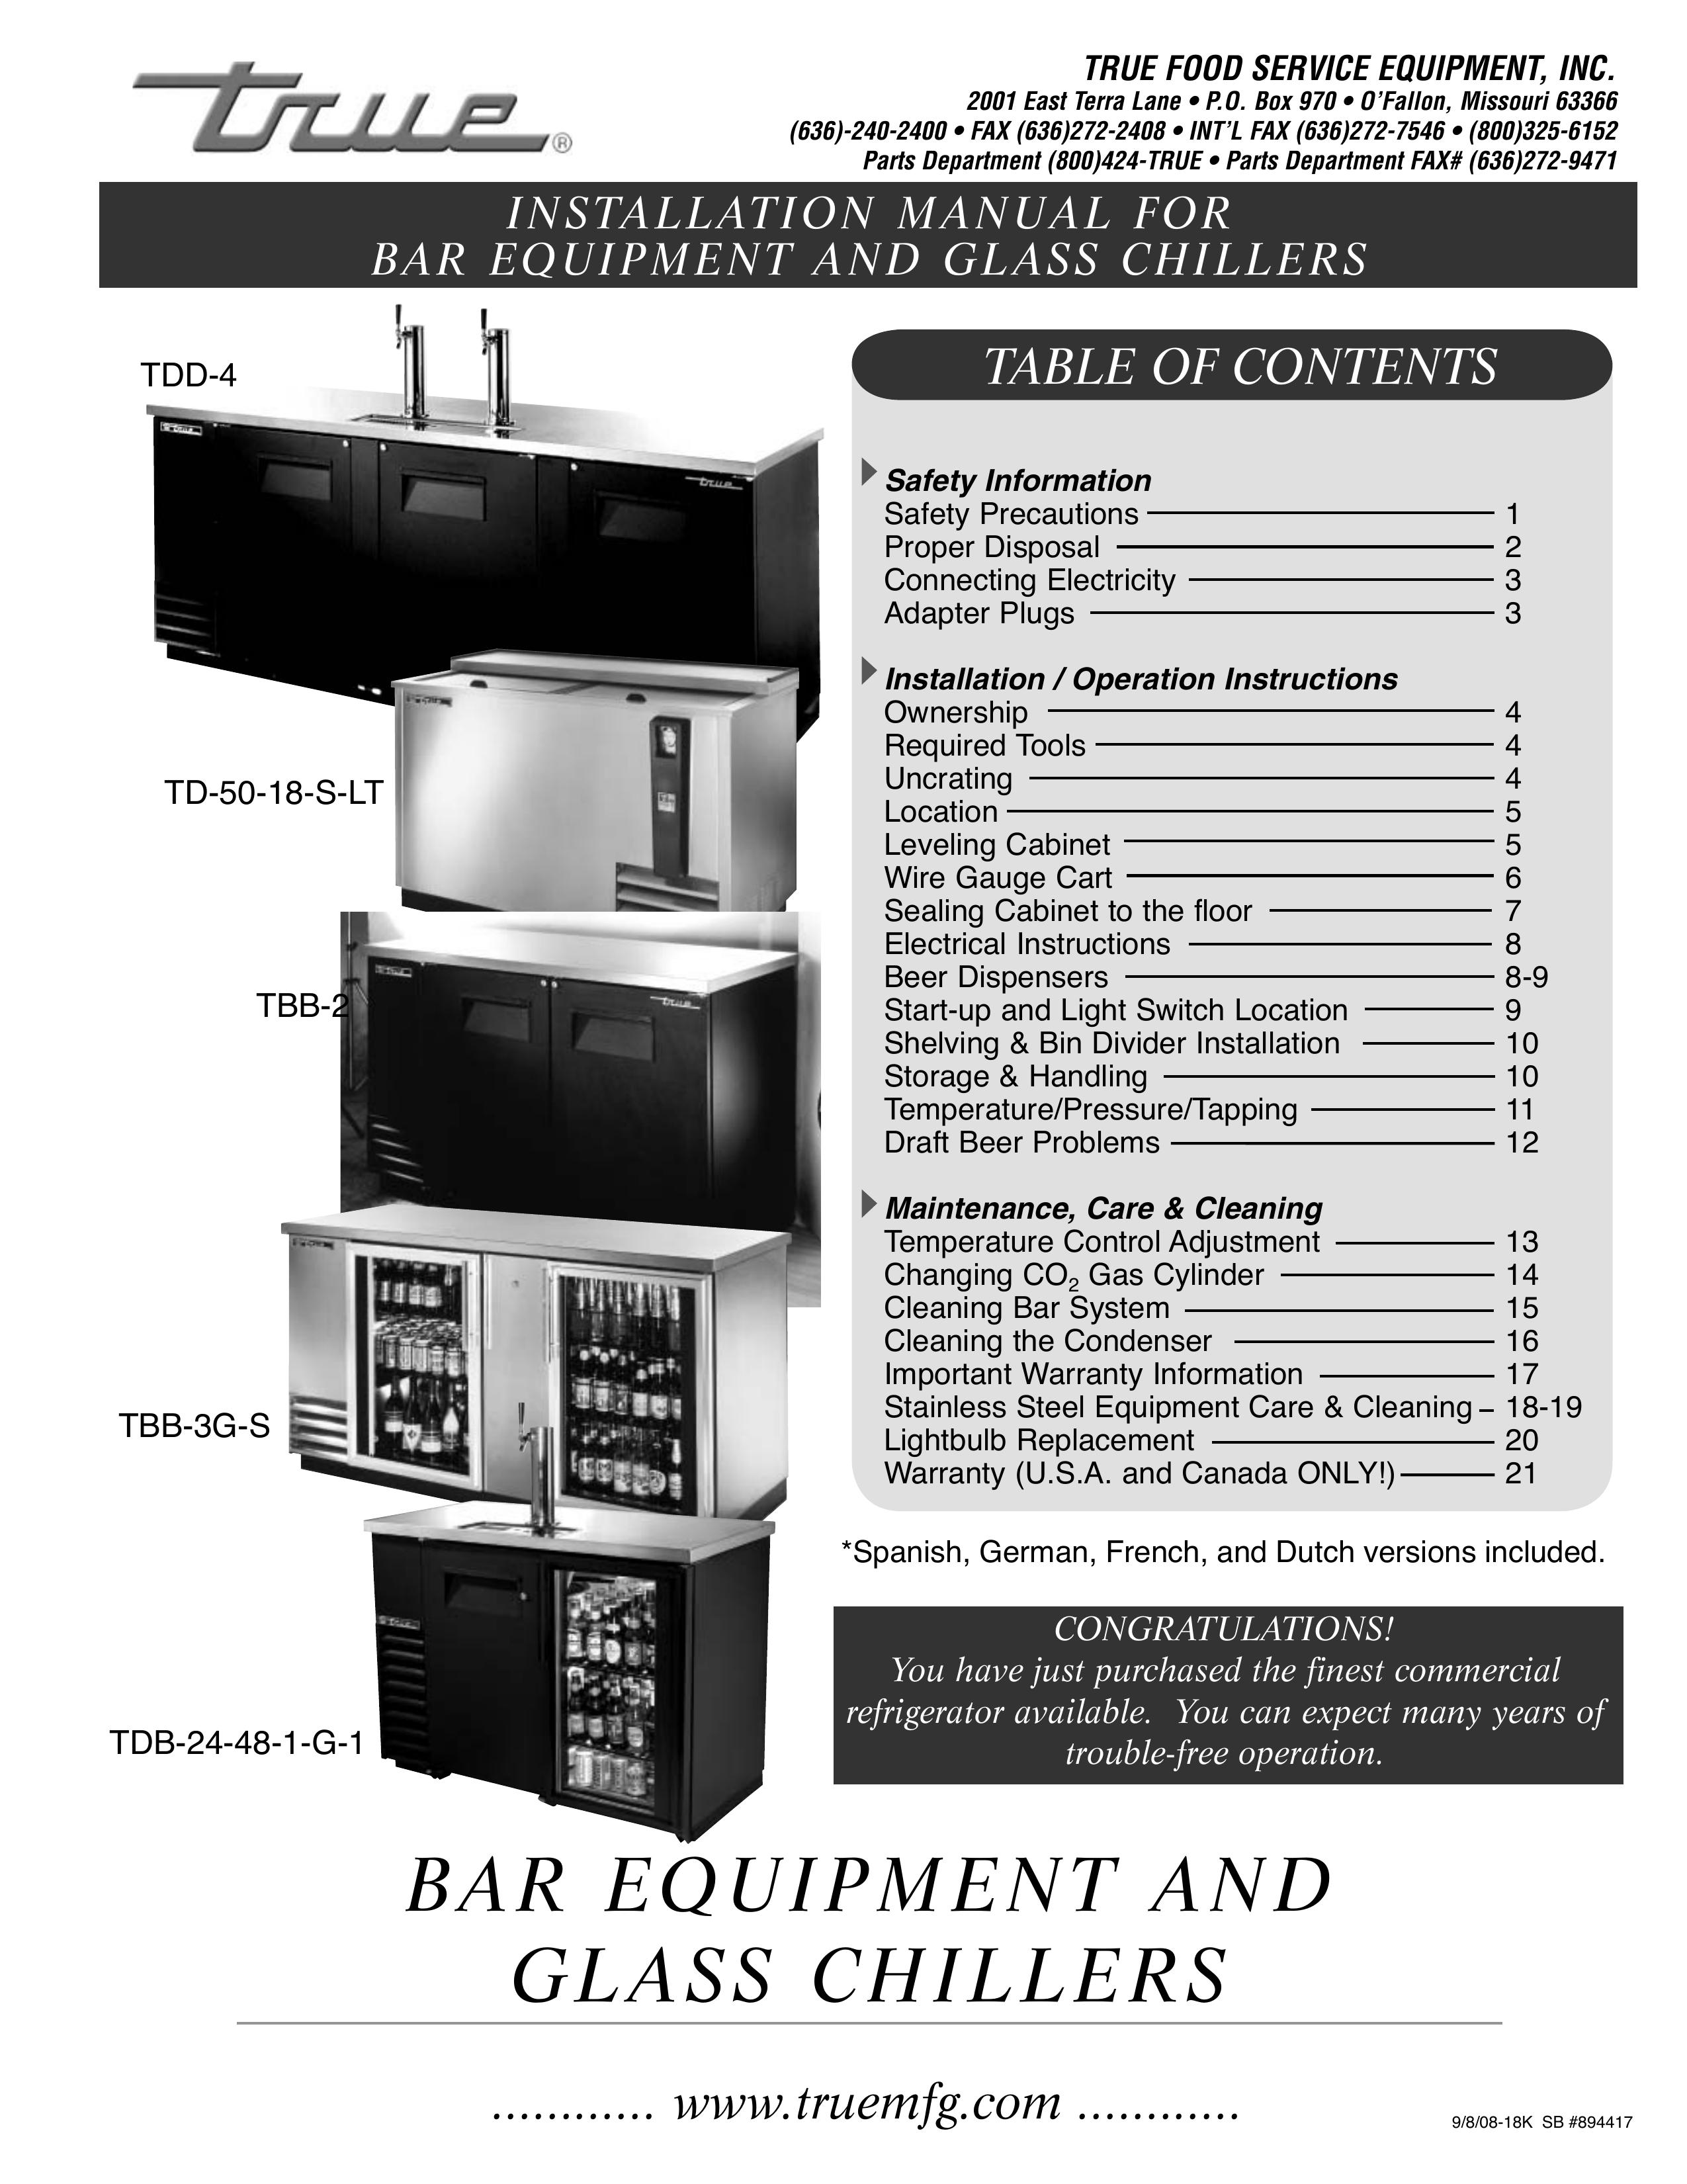 True Manufacturing Company TD-50-18-S-LT Refrigerator User Manual